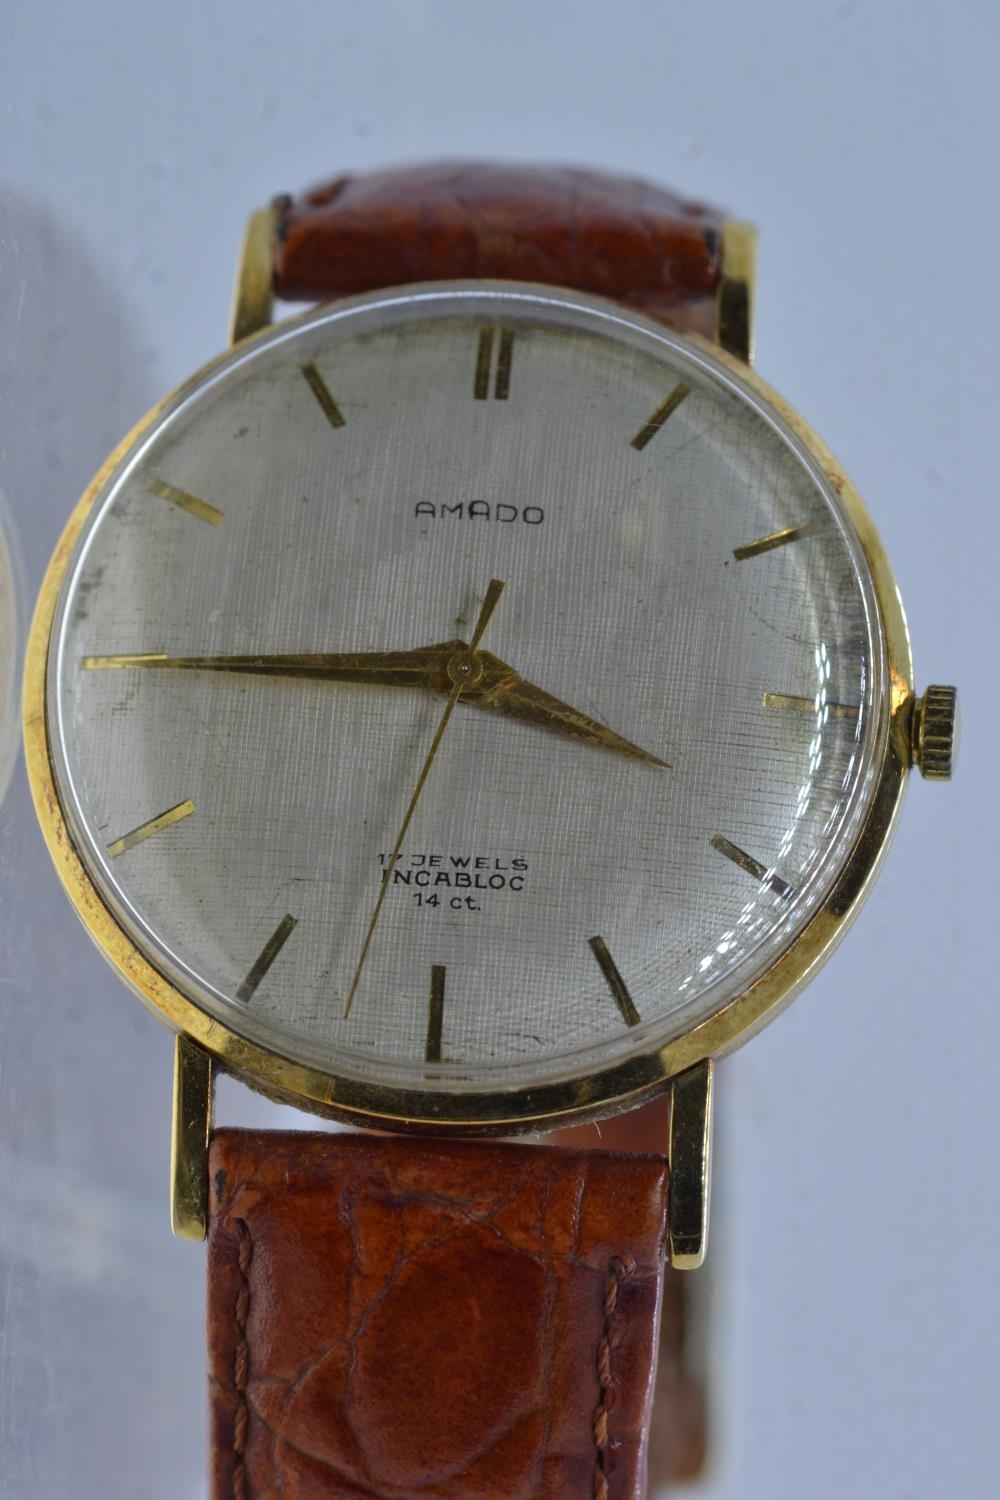 14ct gold cased gents Amado 17 jewels incabloc watch, case diameter 36mm 